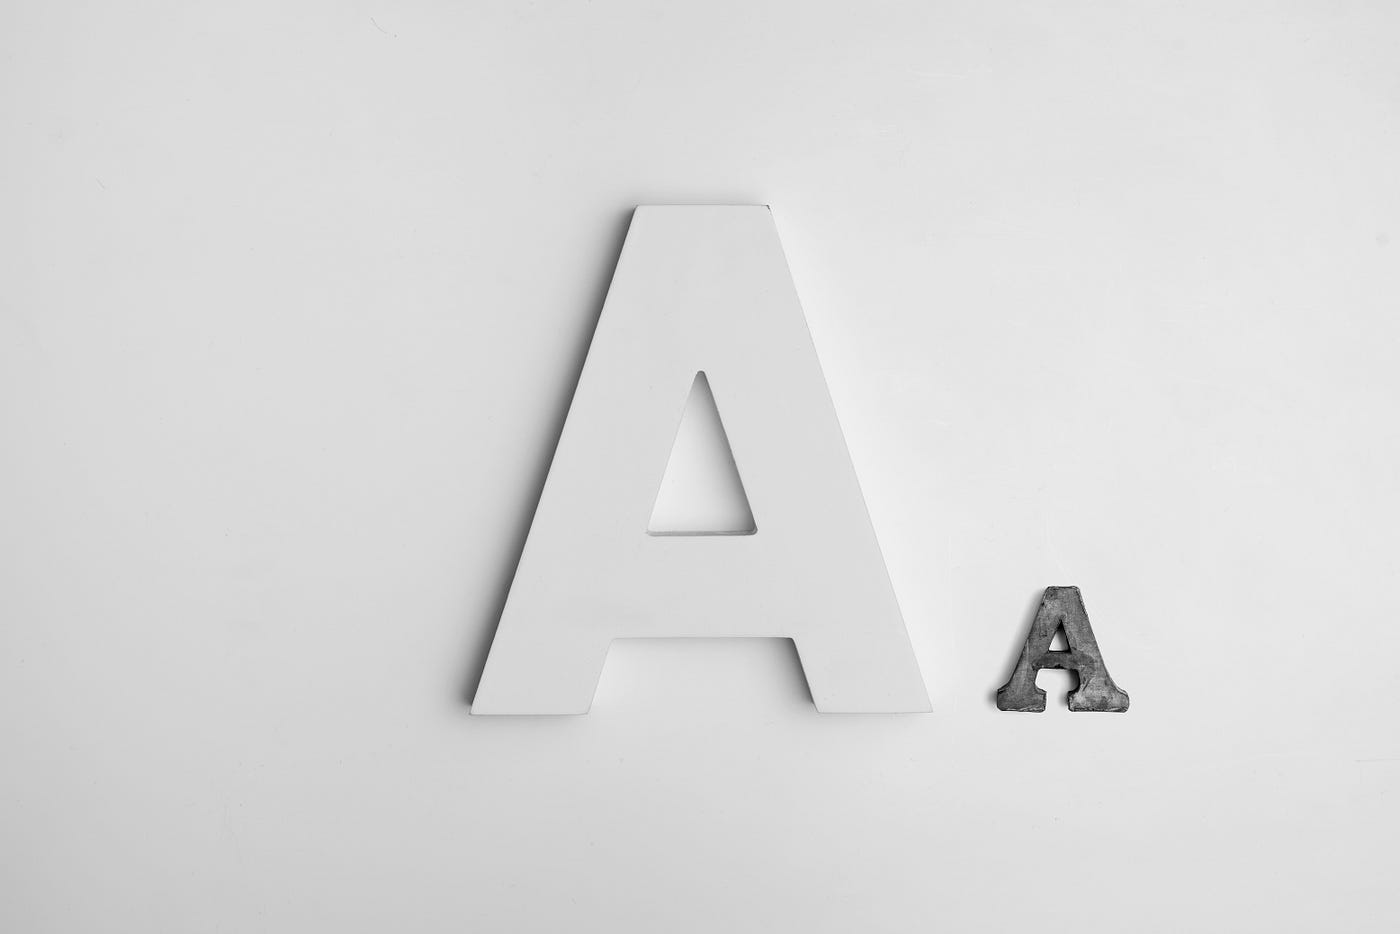 CSS units for font-size: px | em | rem | by Dixita Ganatra | Medium